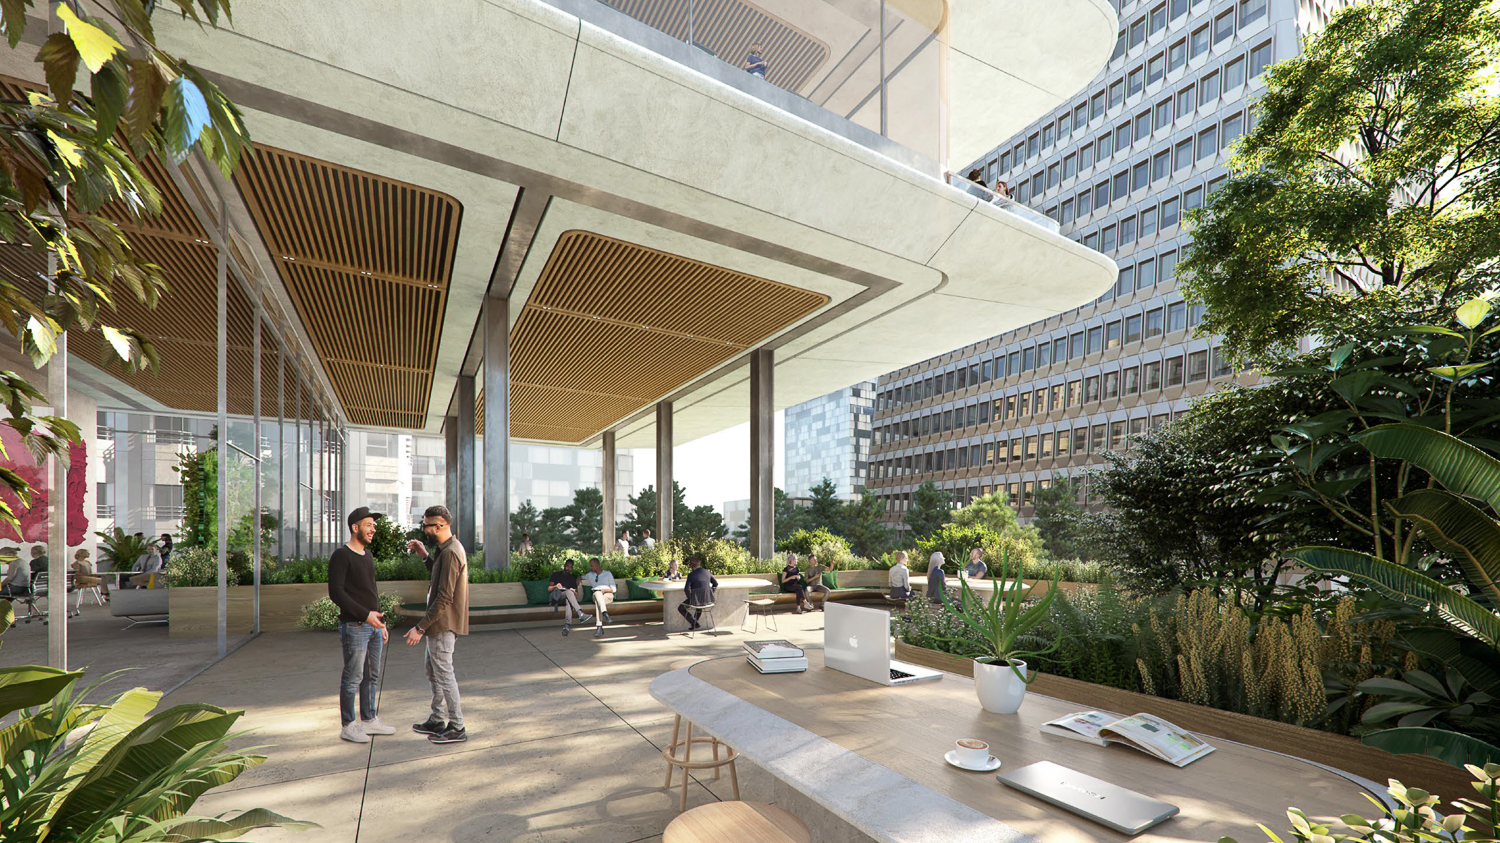 3 Transamerica tenth-floor amenity deck, rendering by Foster + Partners